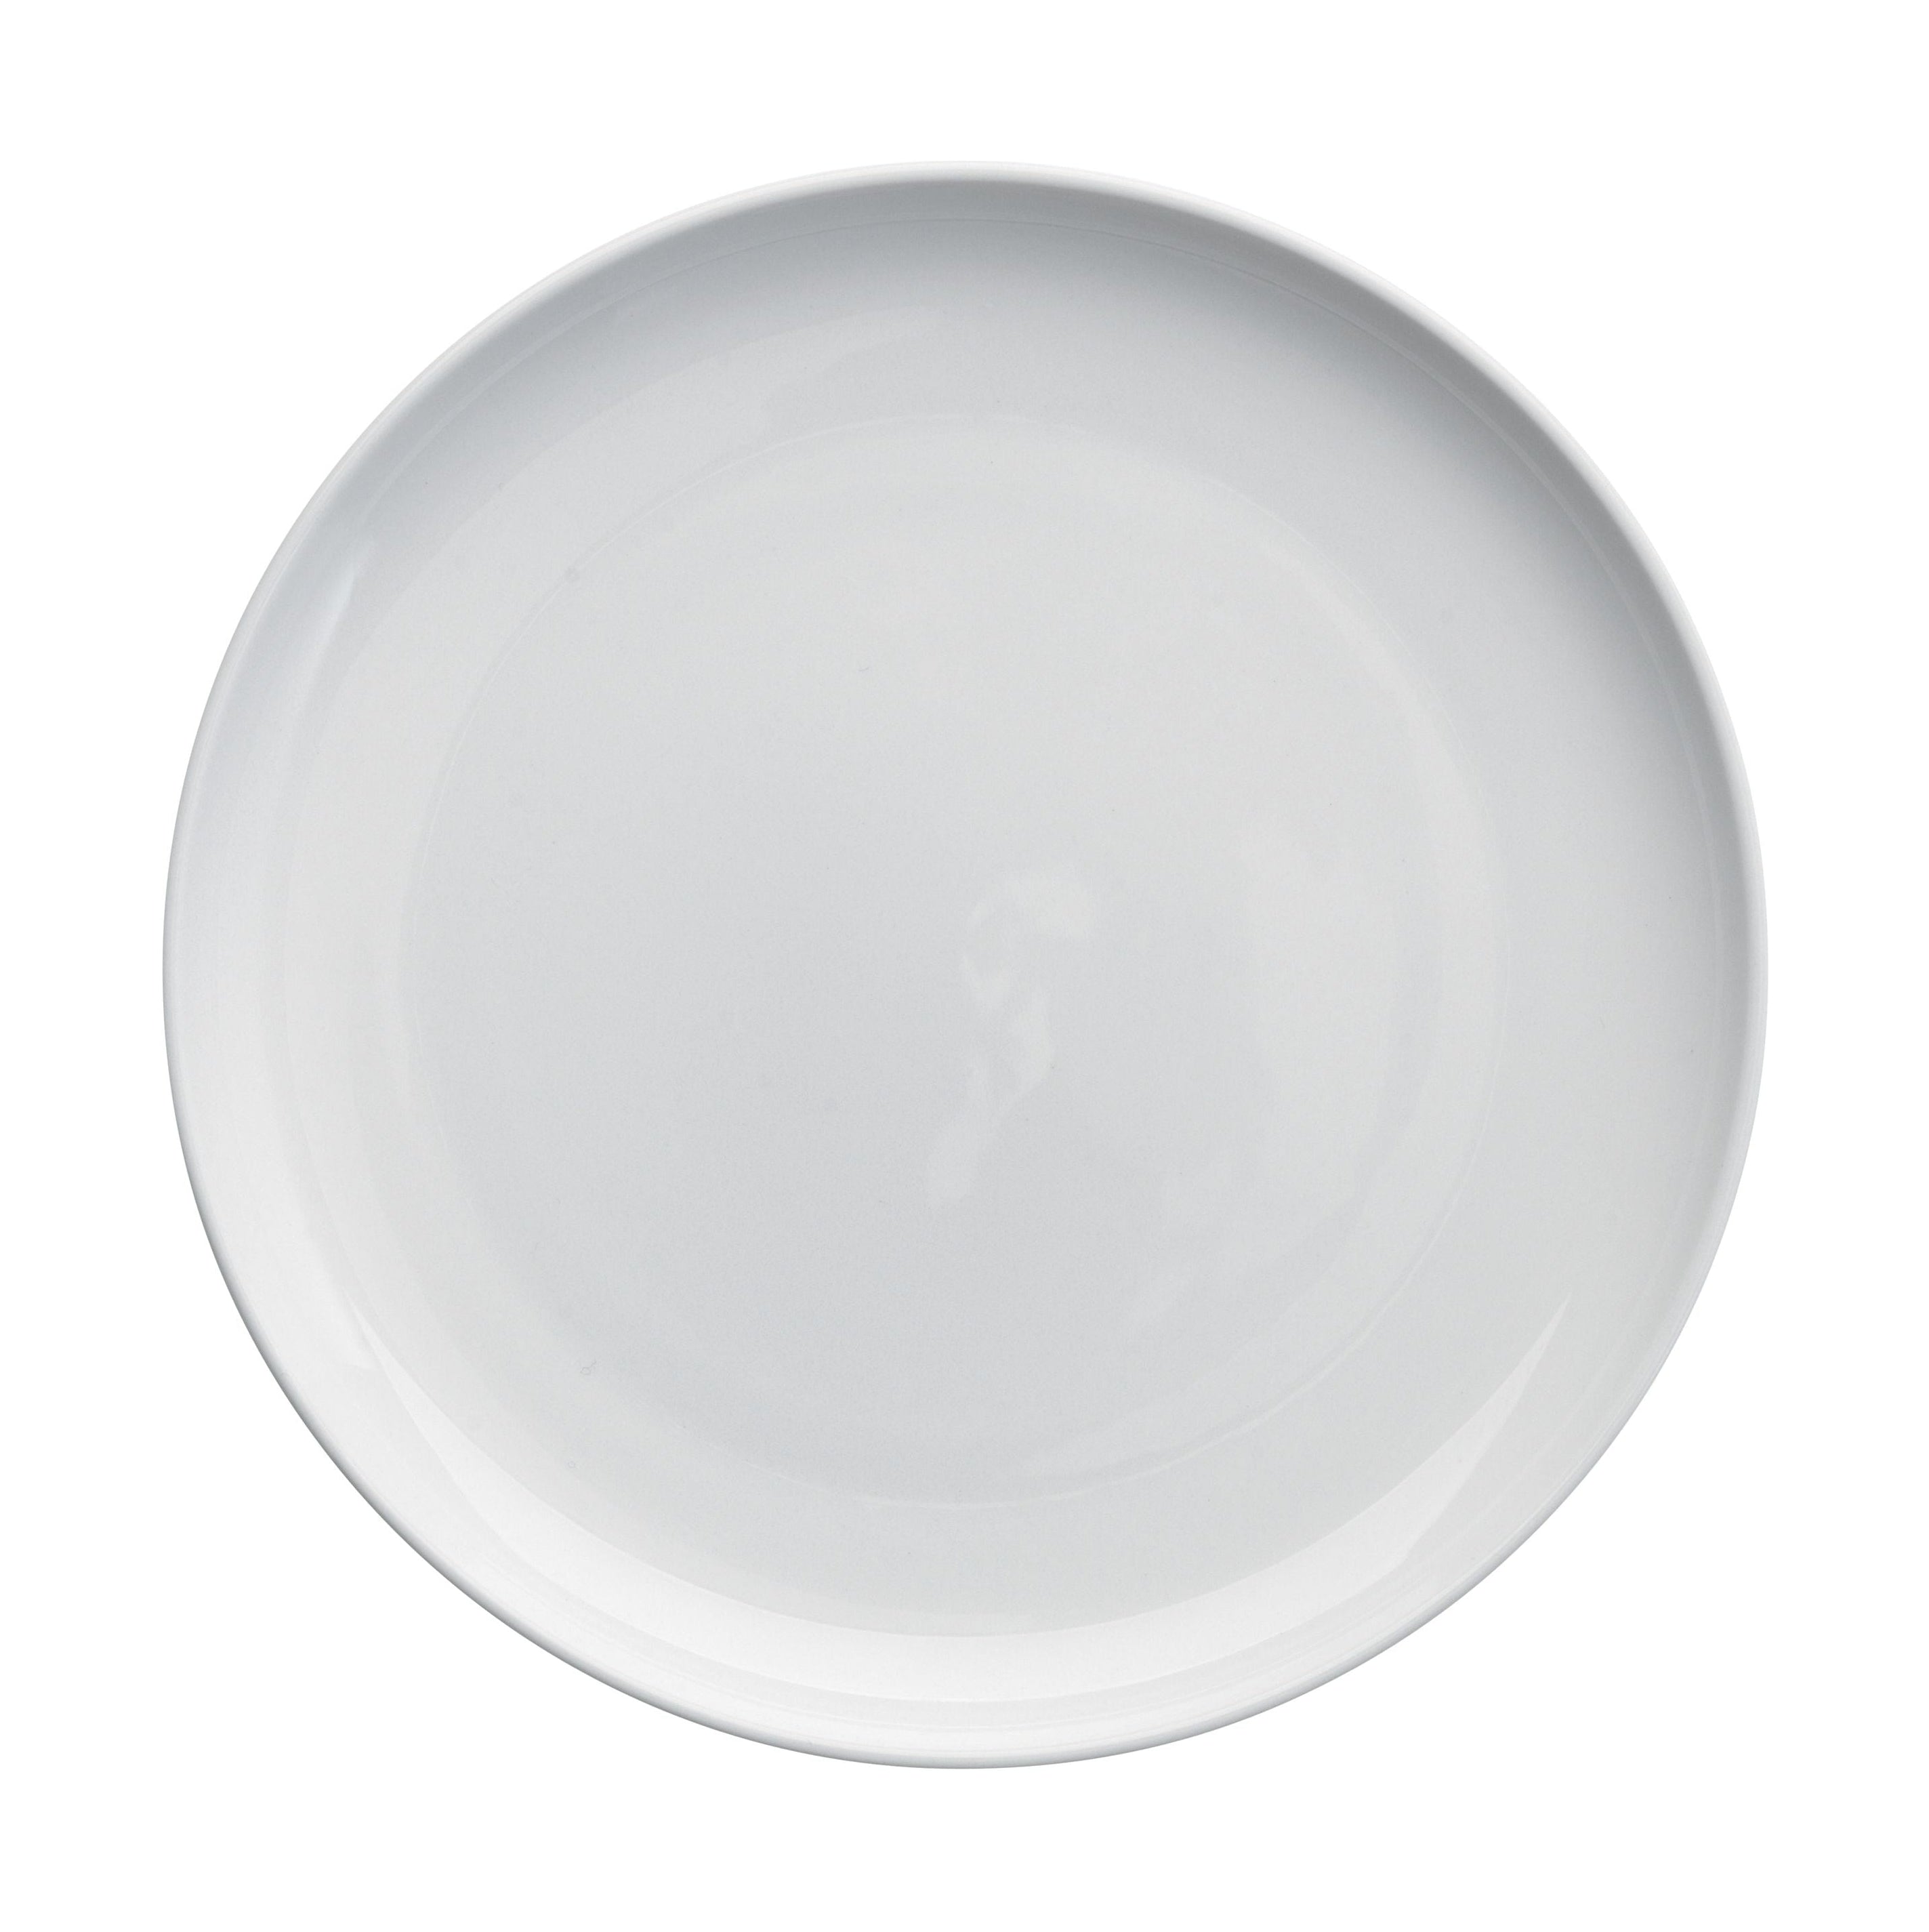 Rörstrand Inwhite Flat Plate, 19 Cm